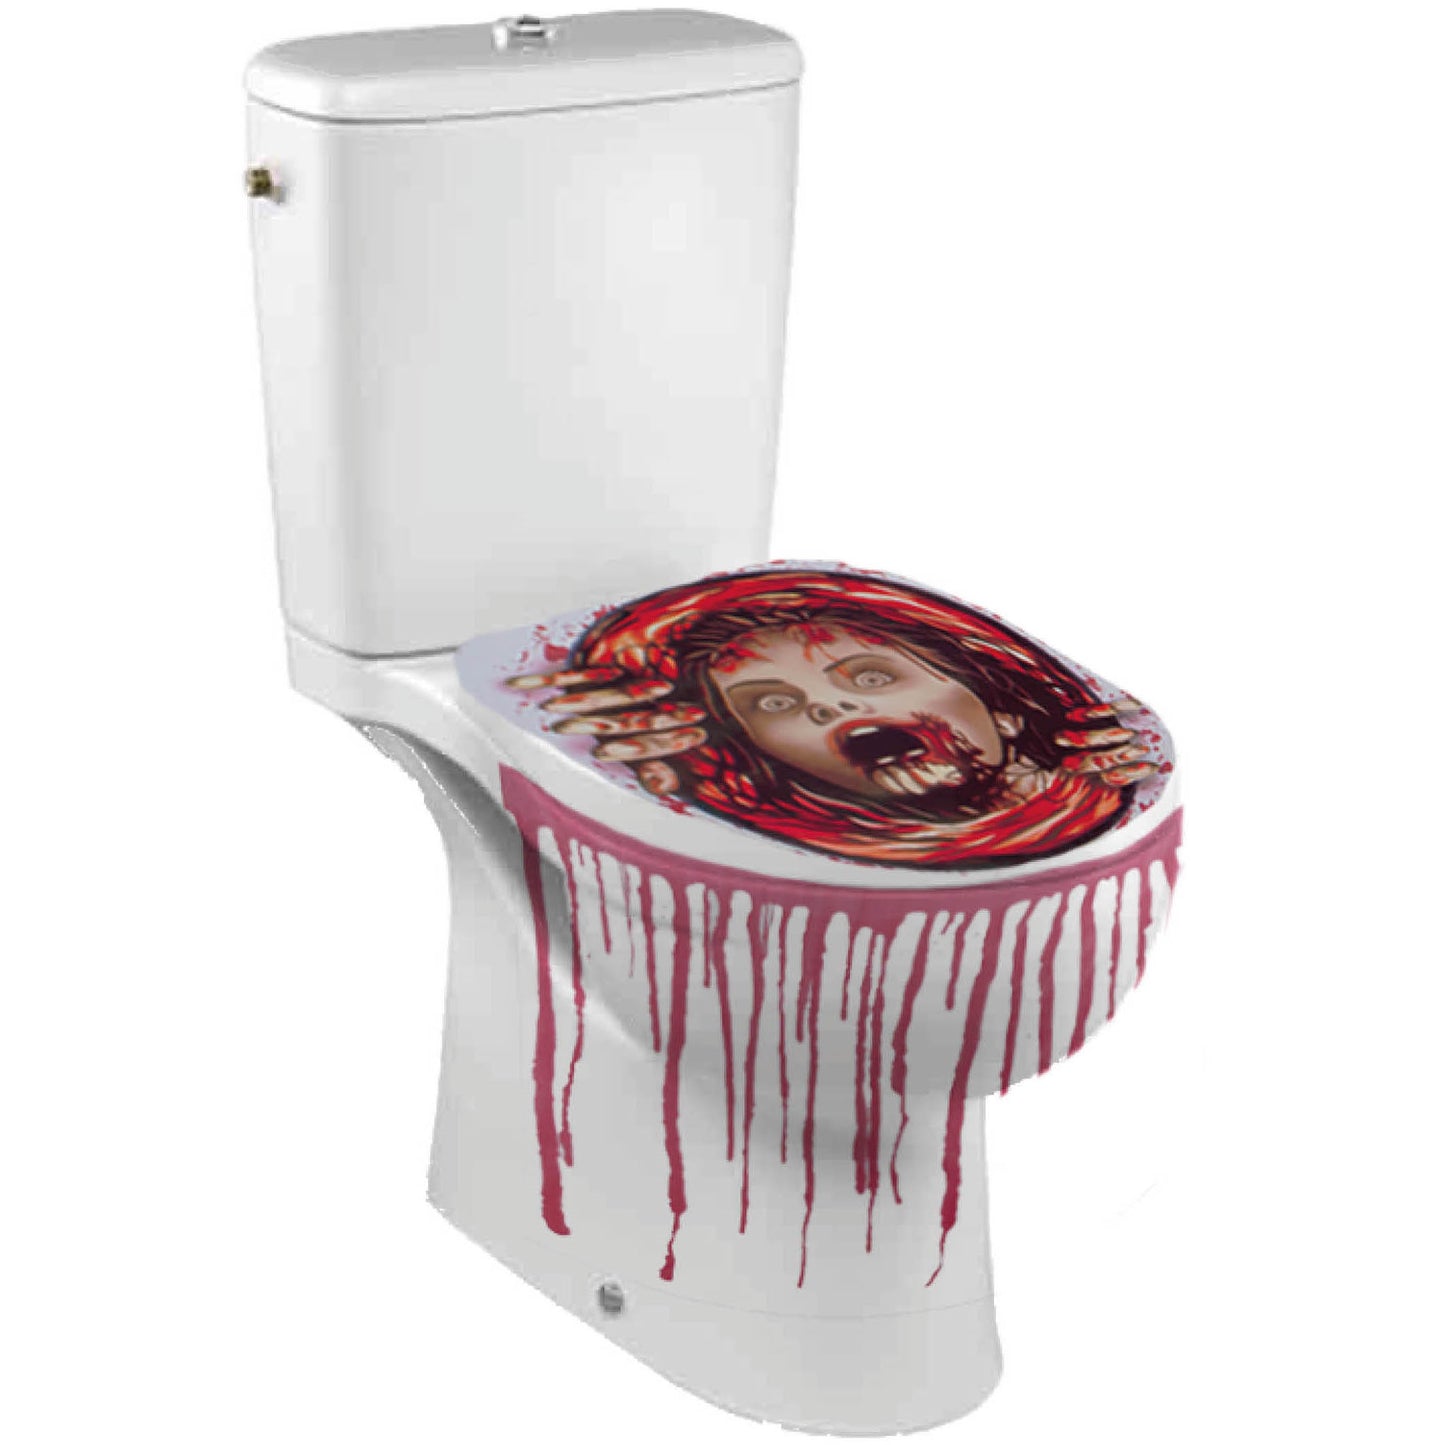 Zombie Toilet Decoration